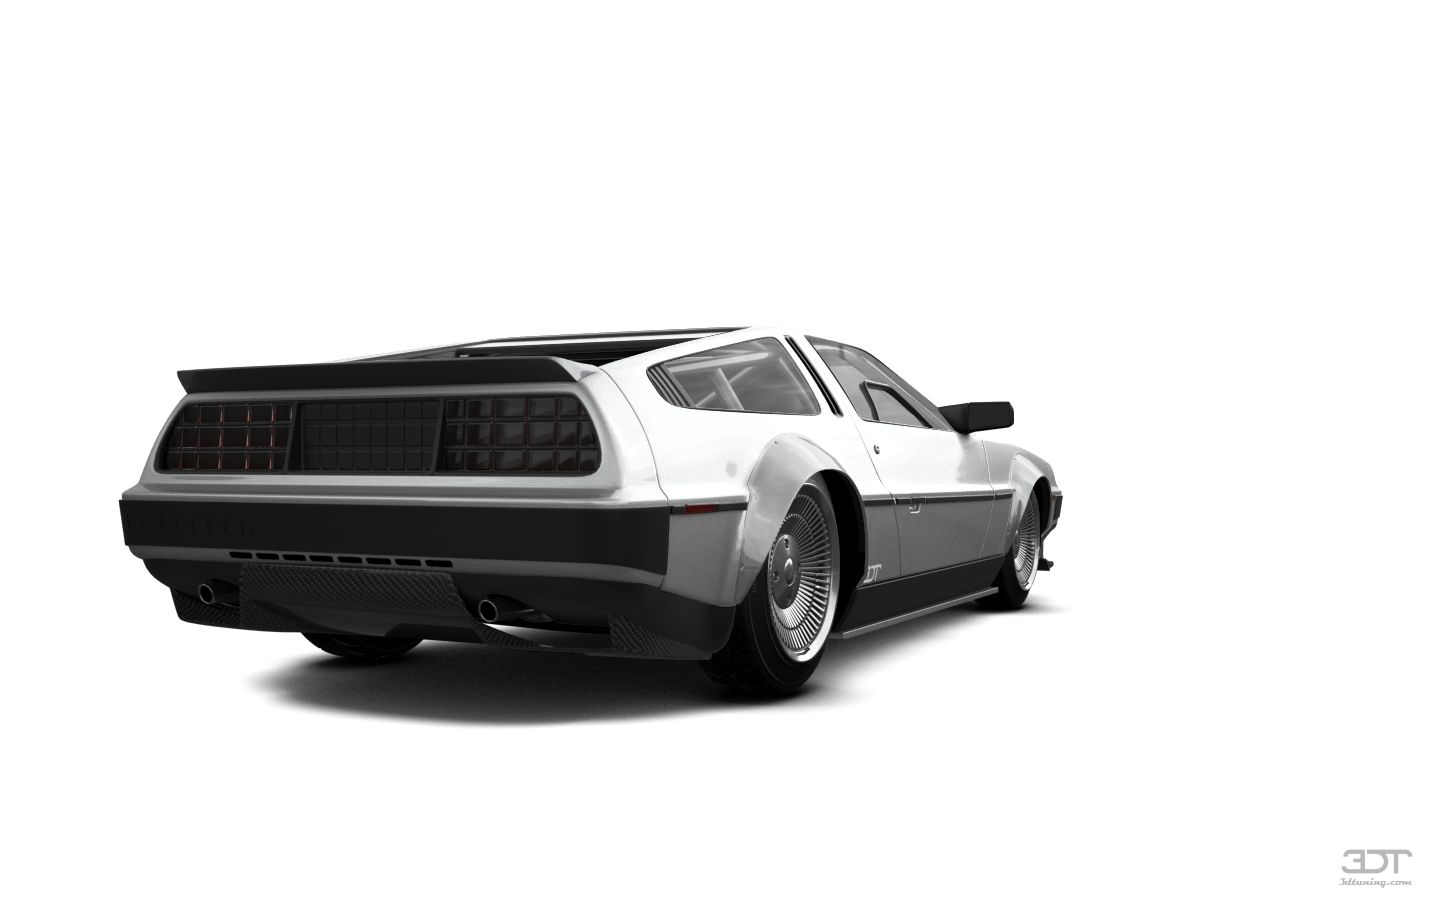 DMC DeLorean'81